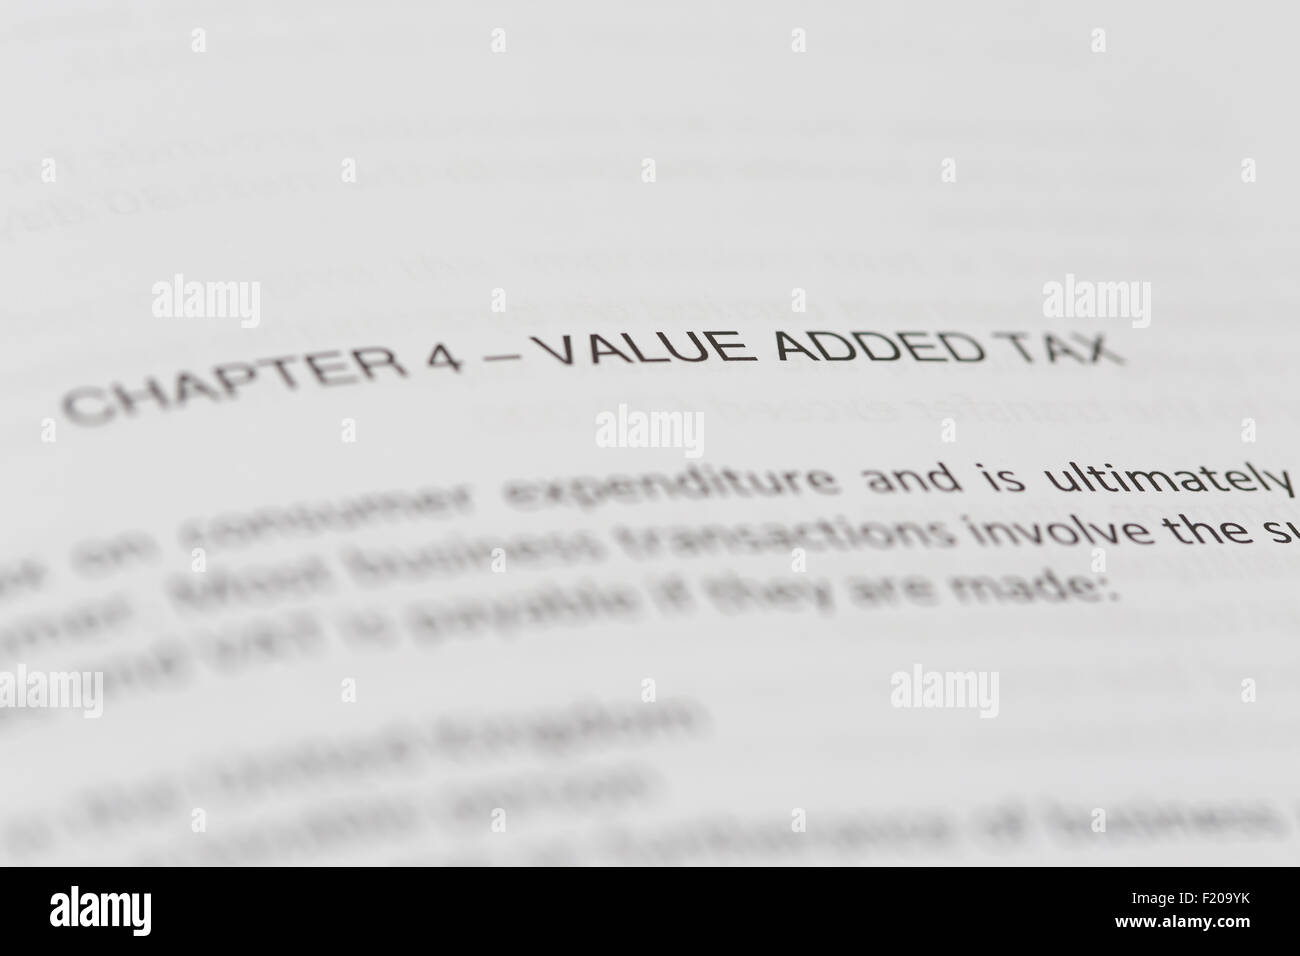 Value Added Tax HMRC Stock Photo